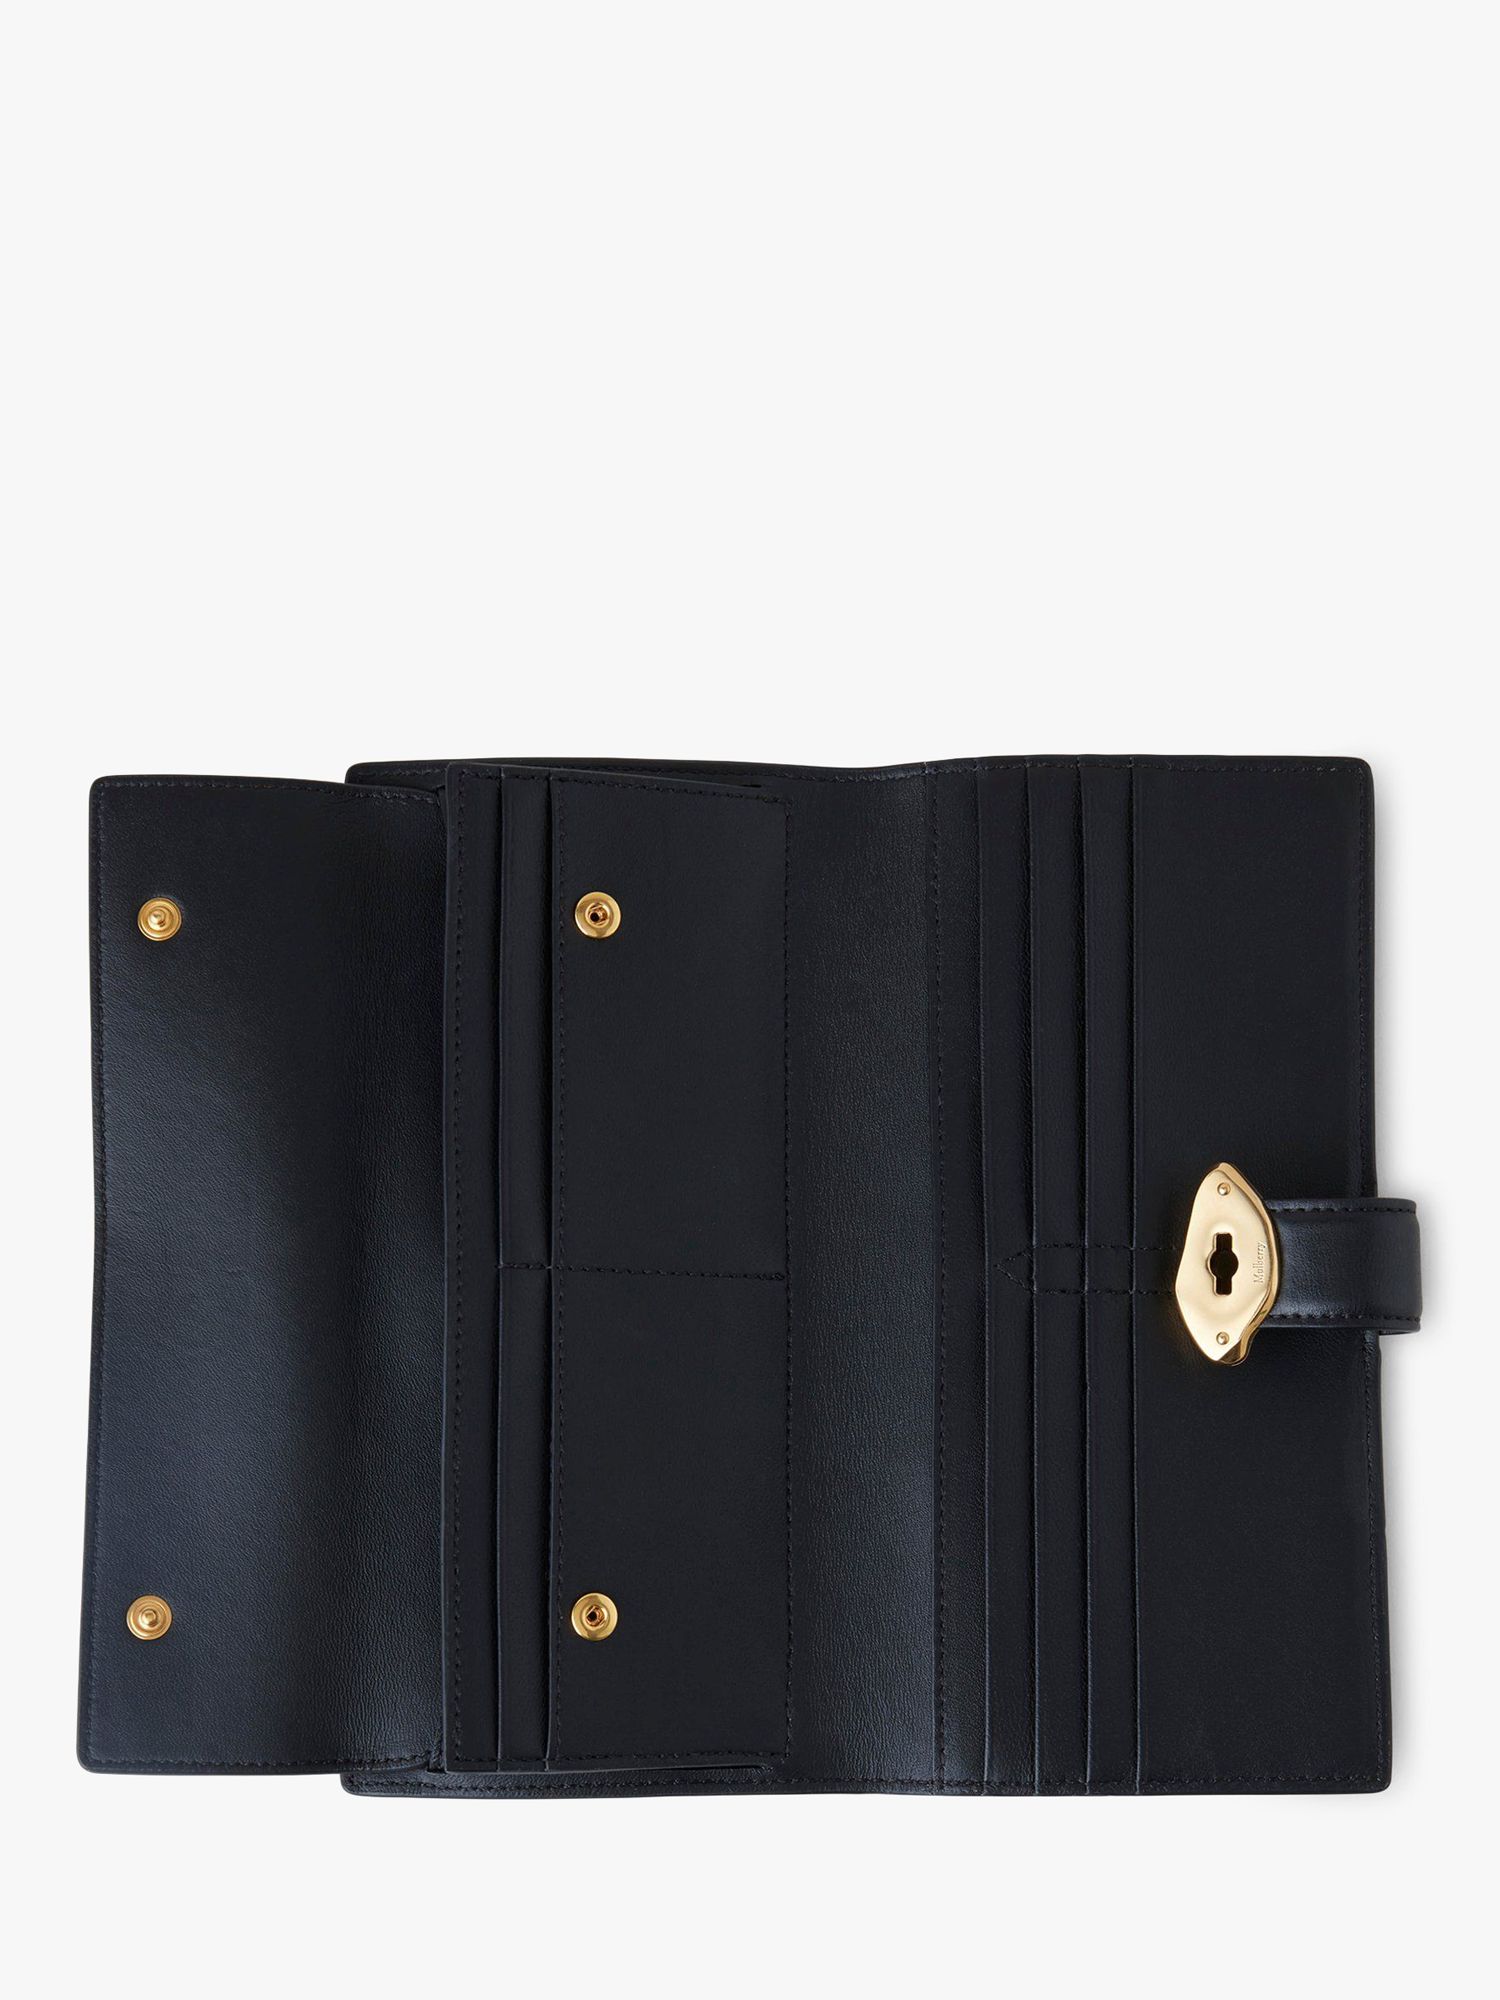 Mulberry Lana Gloss Leather Long Bifold Wallet, Black at John Lewis ...